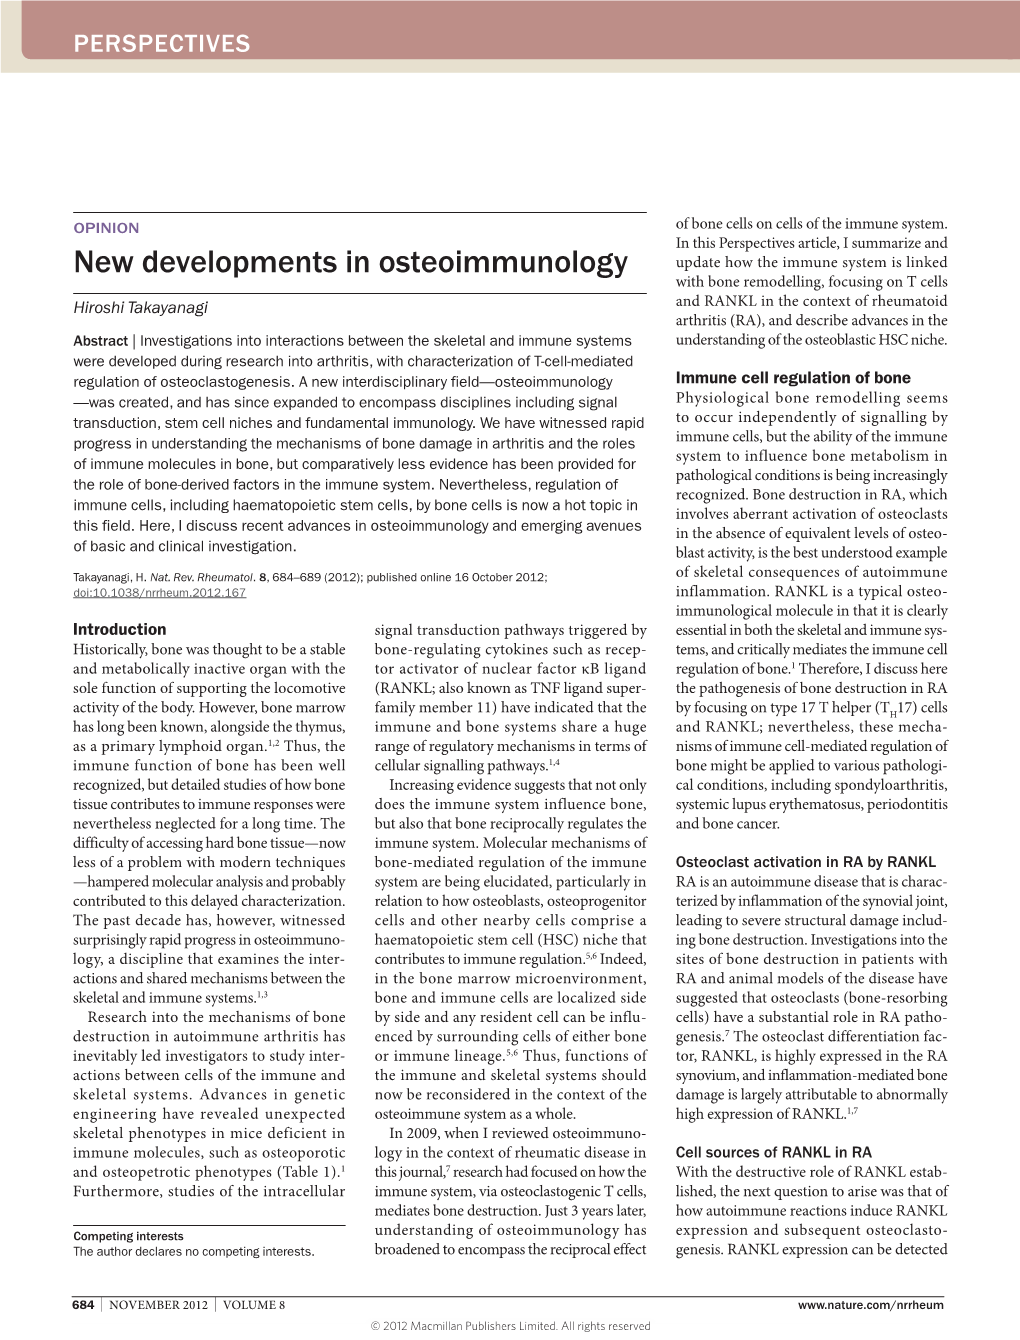 New Developments in Osteoimmunology